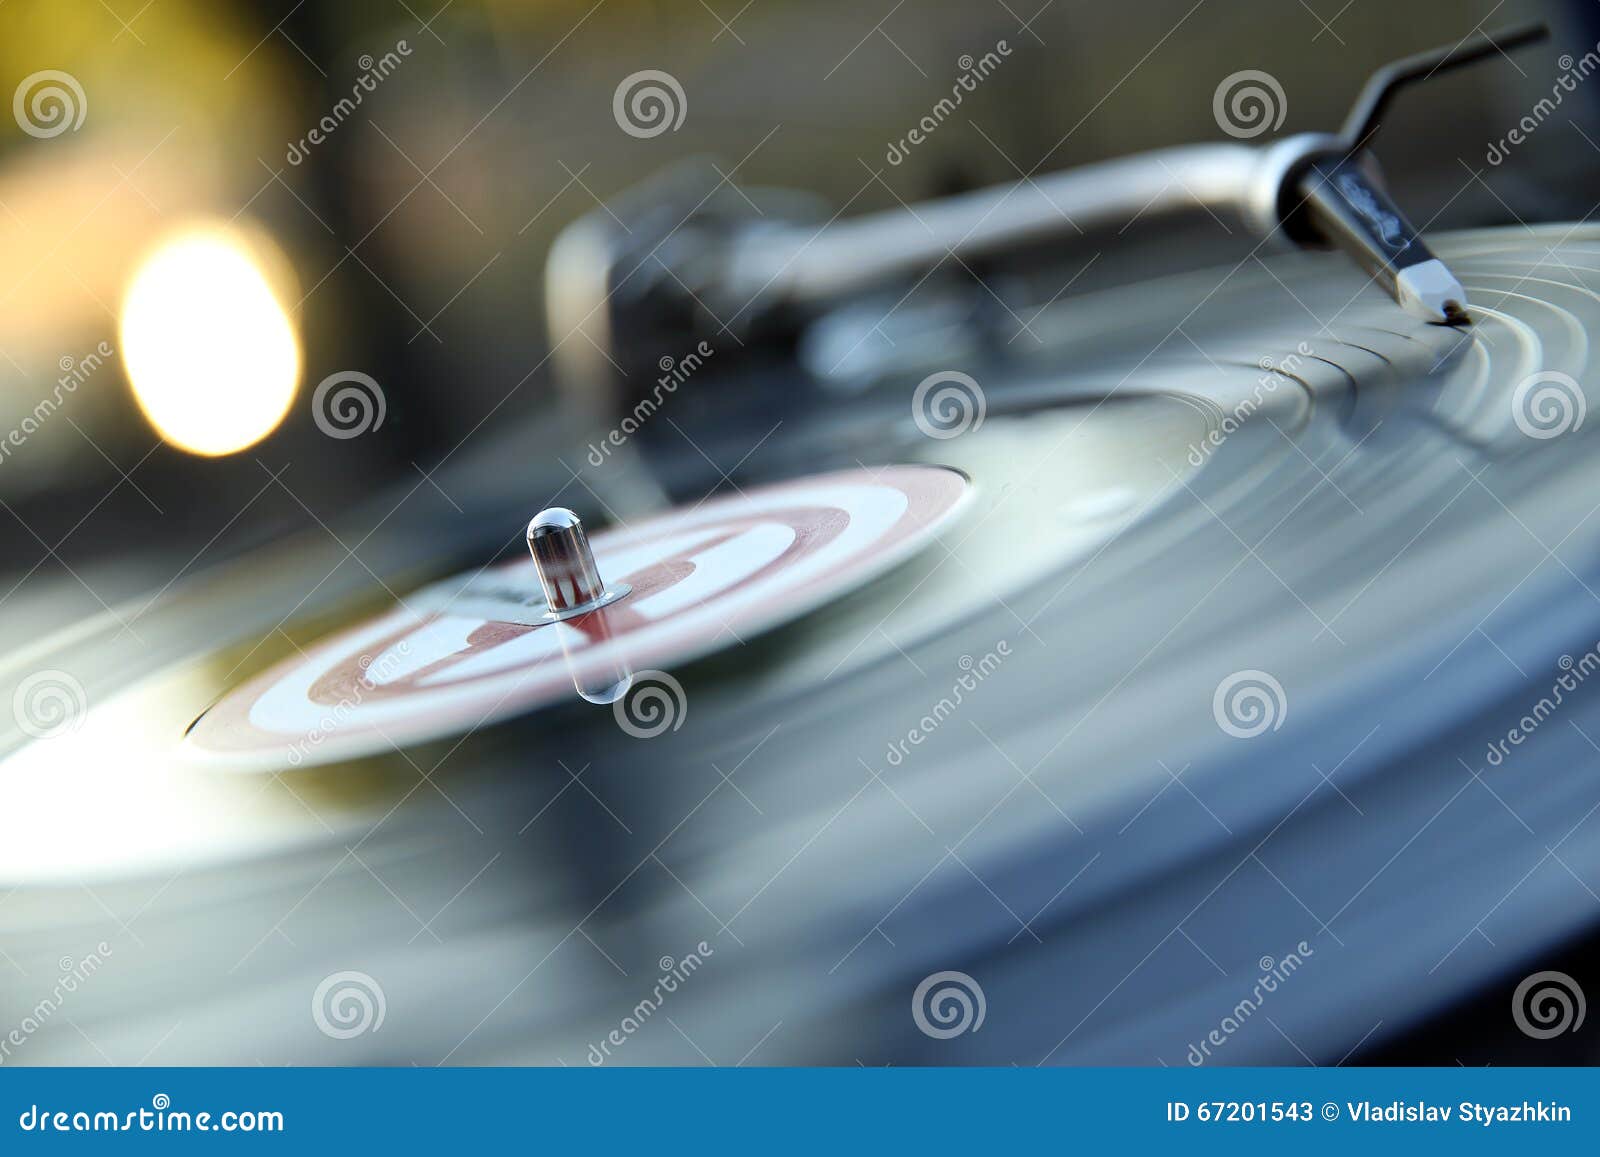 shellac vinyl dj turntable disco recording sound rotation